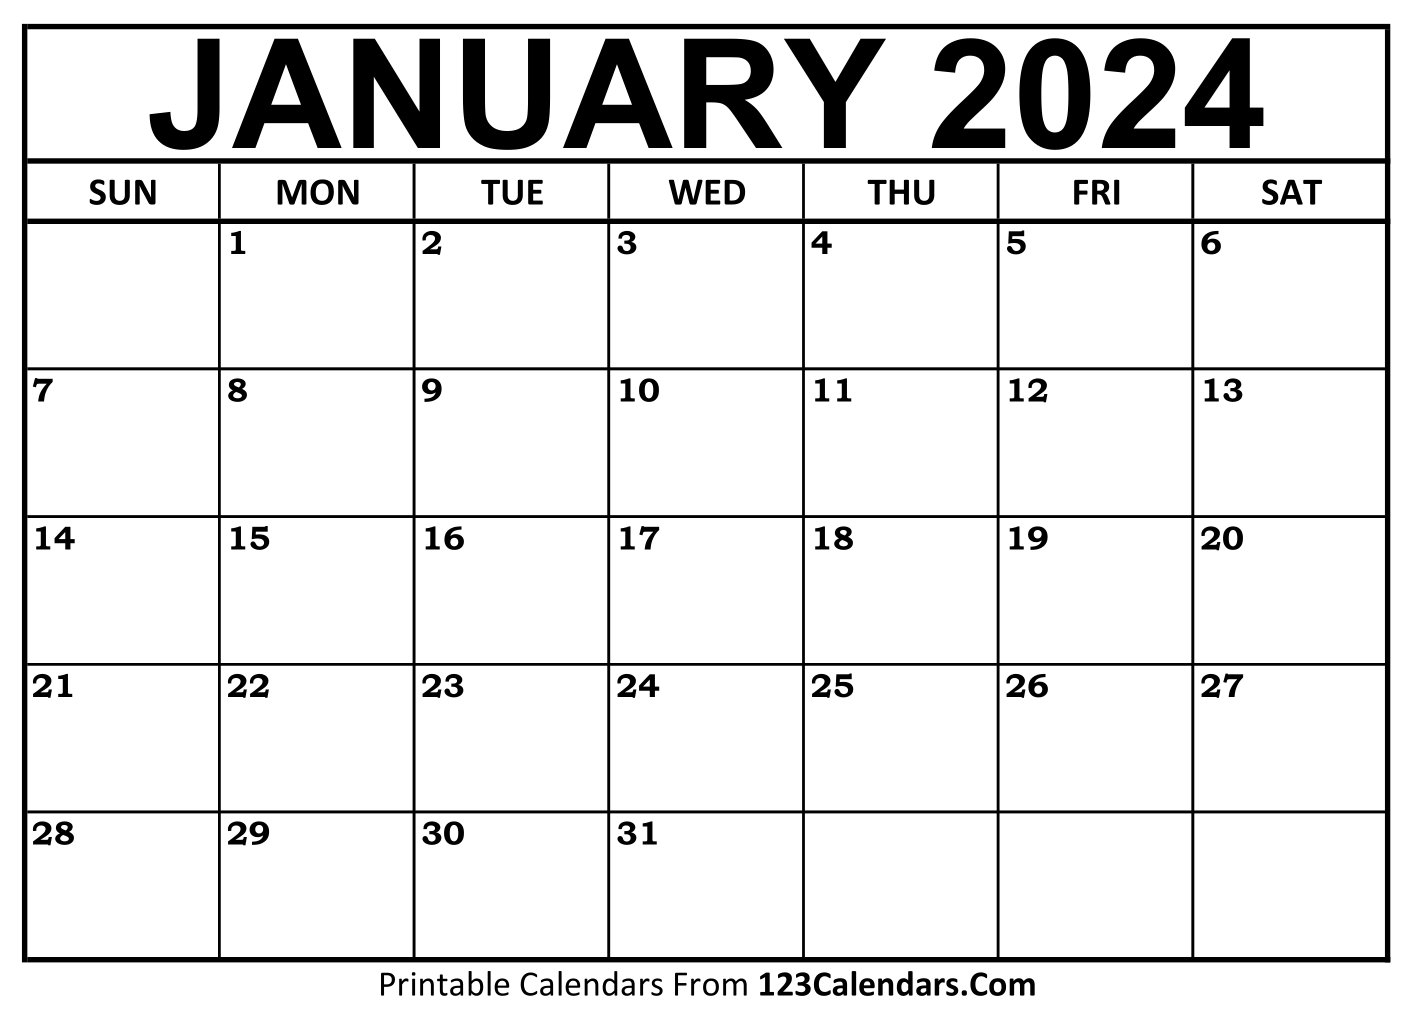 Printable January 2024 Calendar Templates - 123Calendars for Calendar Of January 2024 Printable